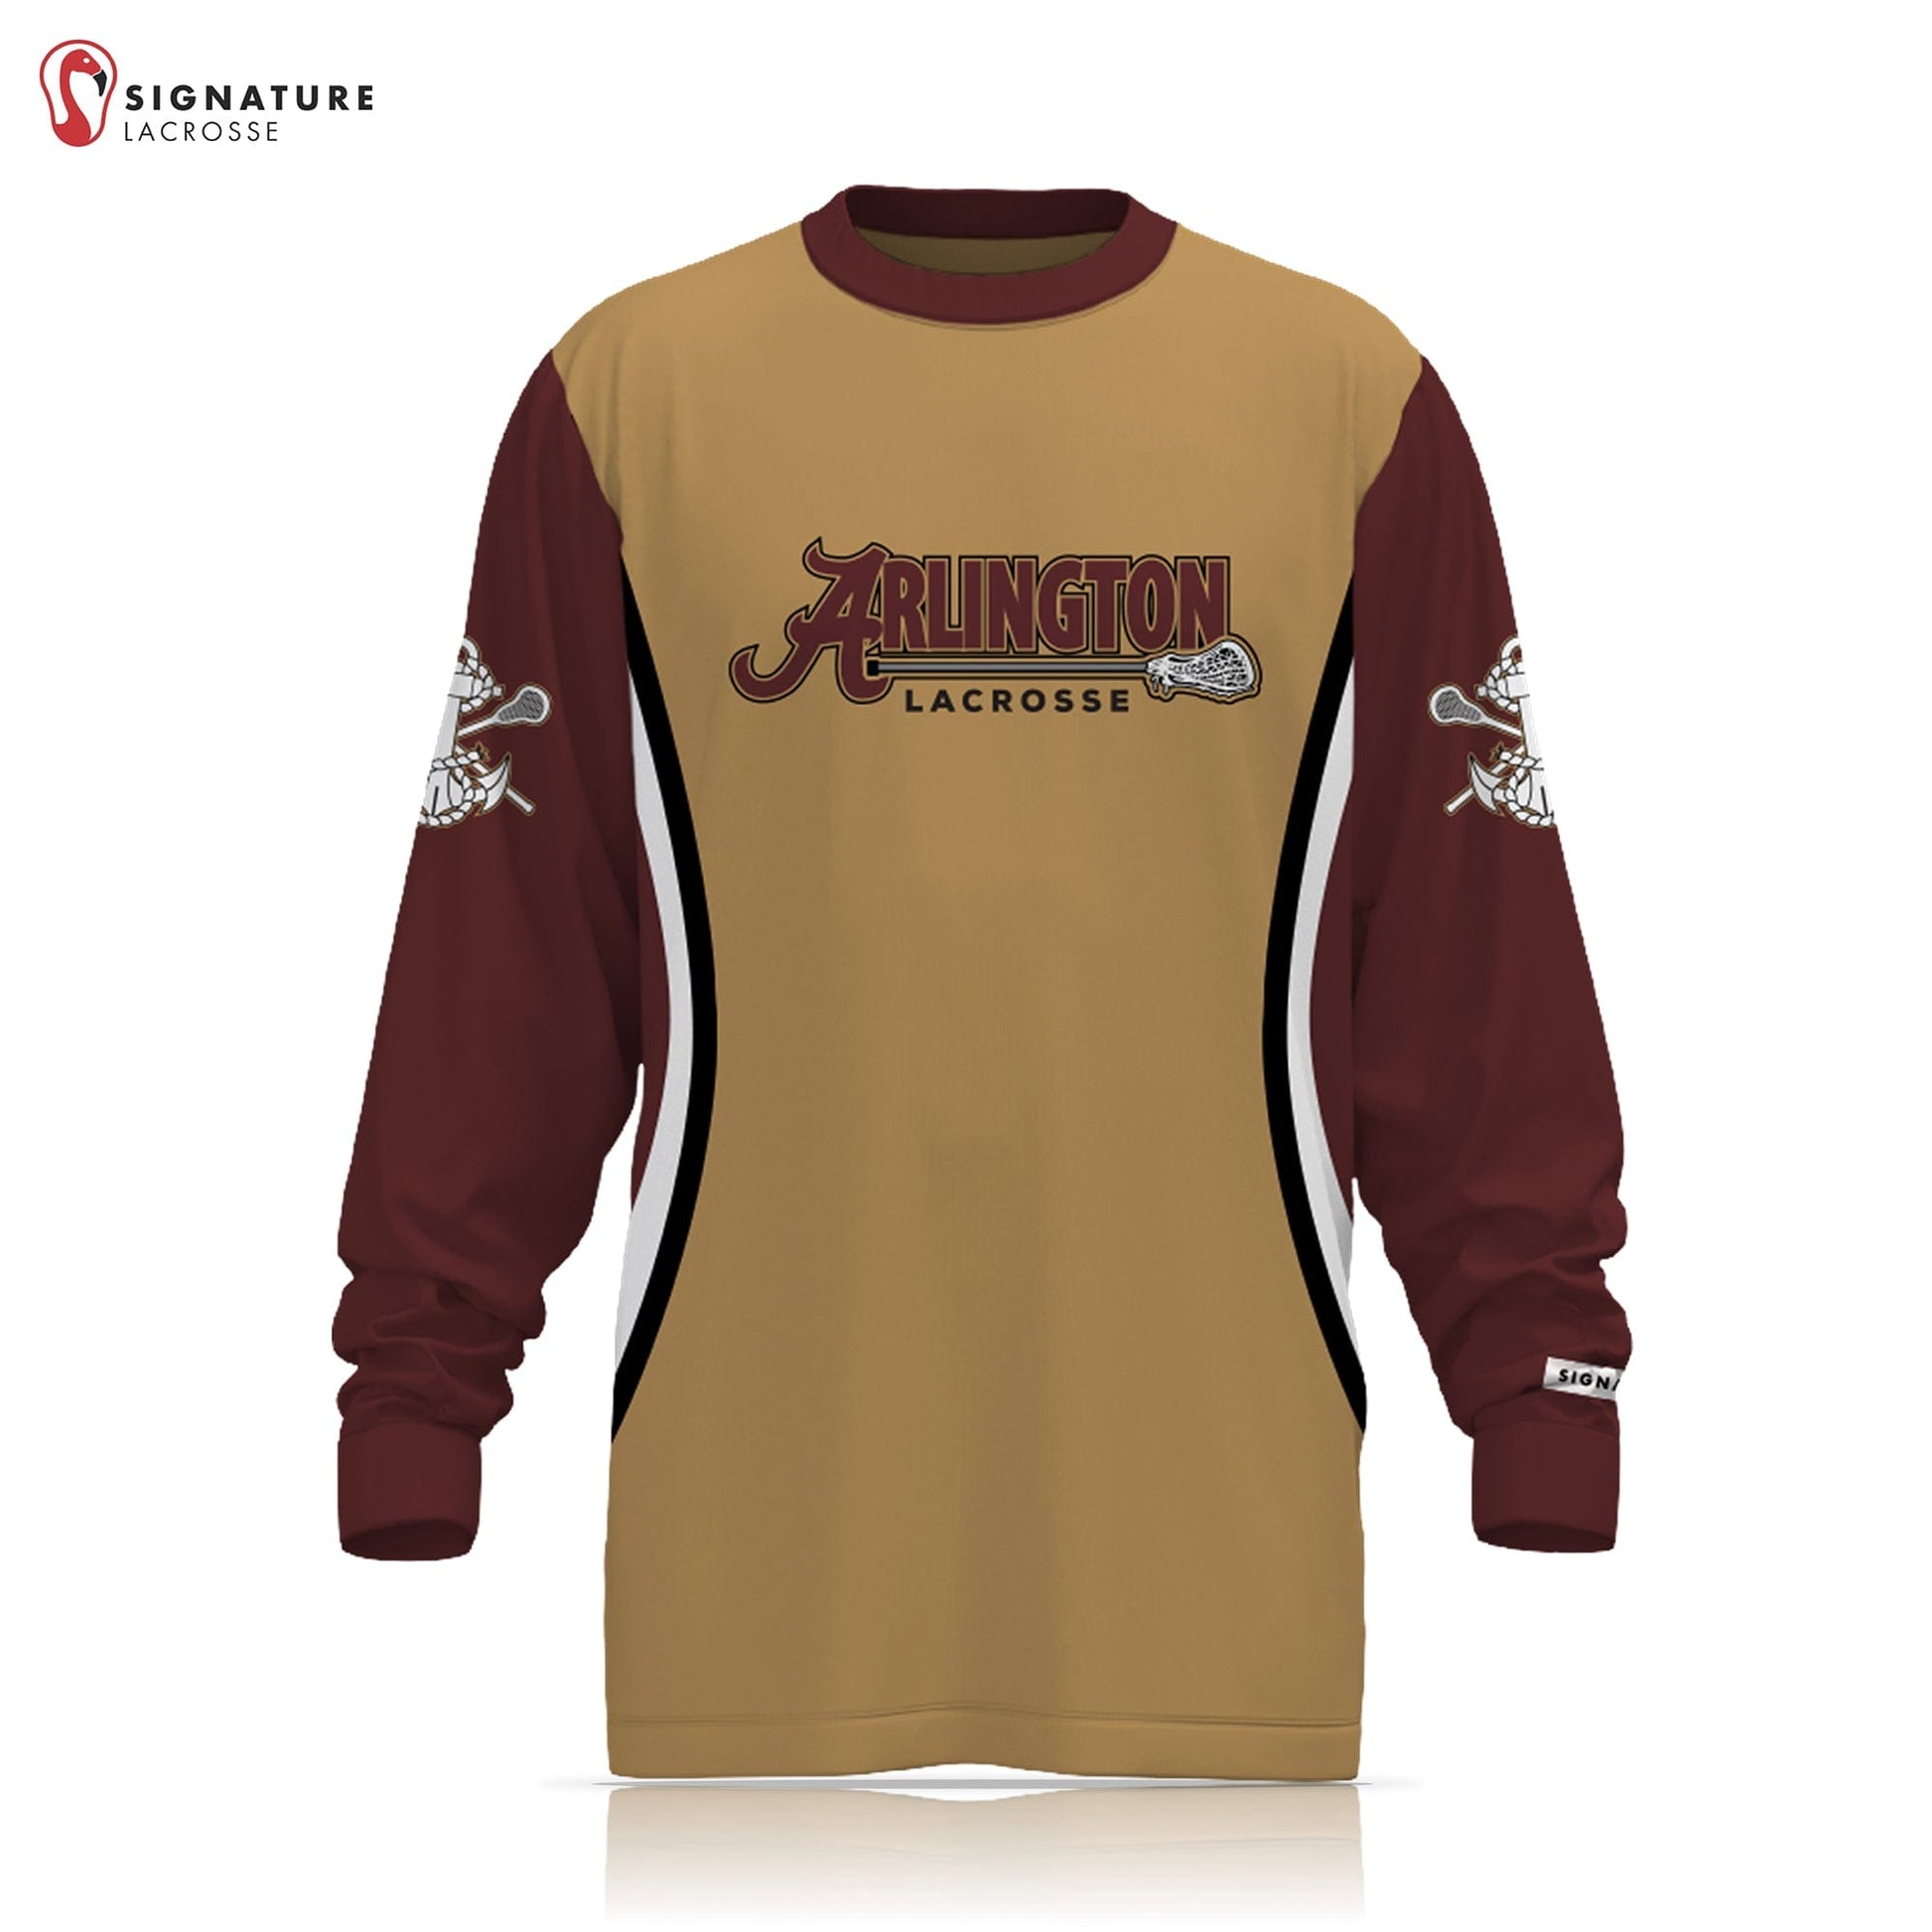 Arlington Lagrange Lacrosse Men's Long Sleeve Shooter Shirt: 1-2 Signature Lacrosse